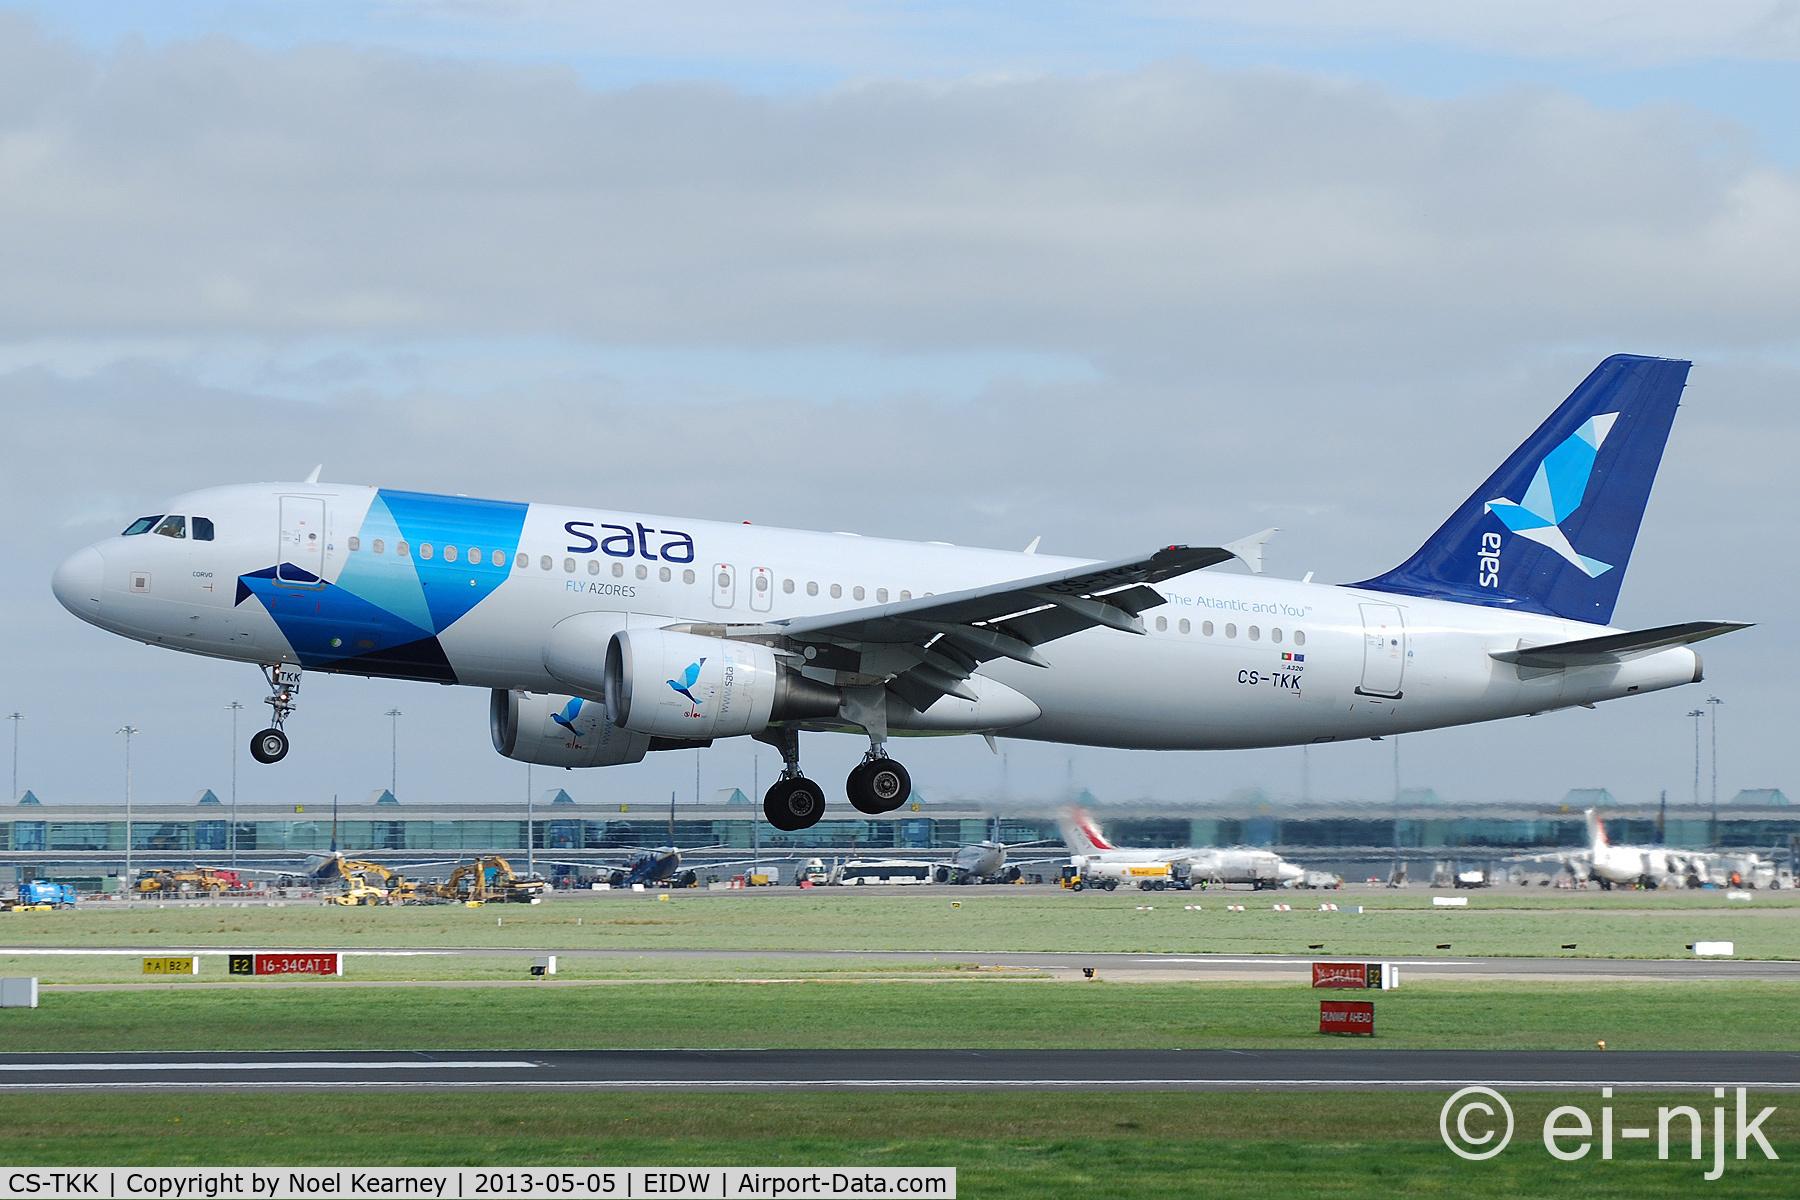 CS-TKK, 2005 Airbus A320-214 C/N 2390, Landing Rwy 28 at Dublin Airport.